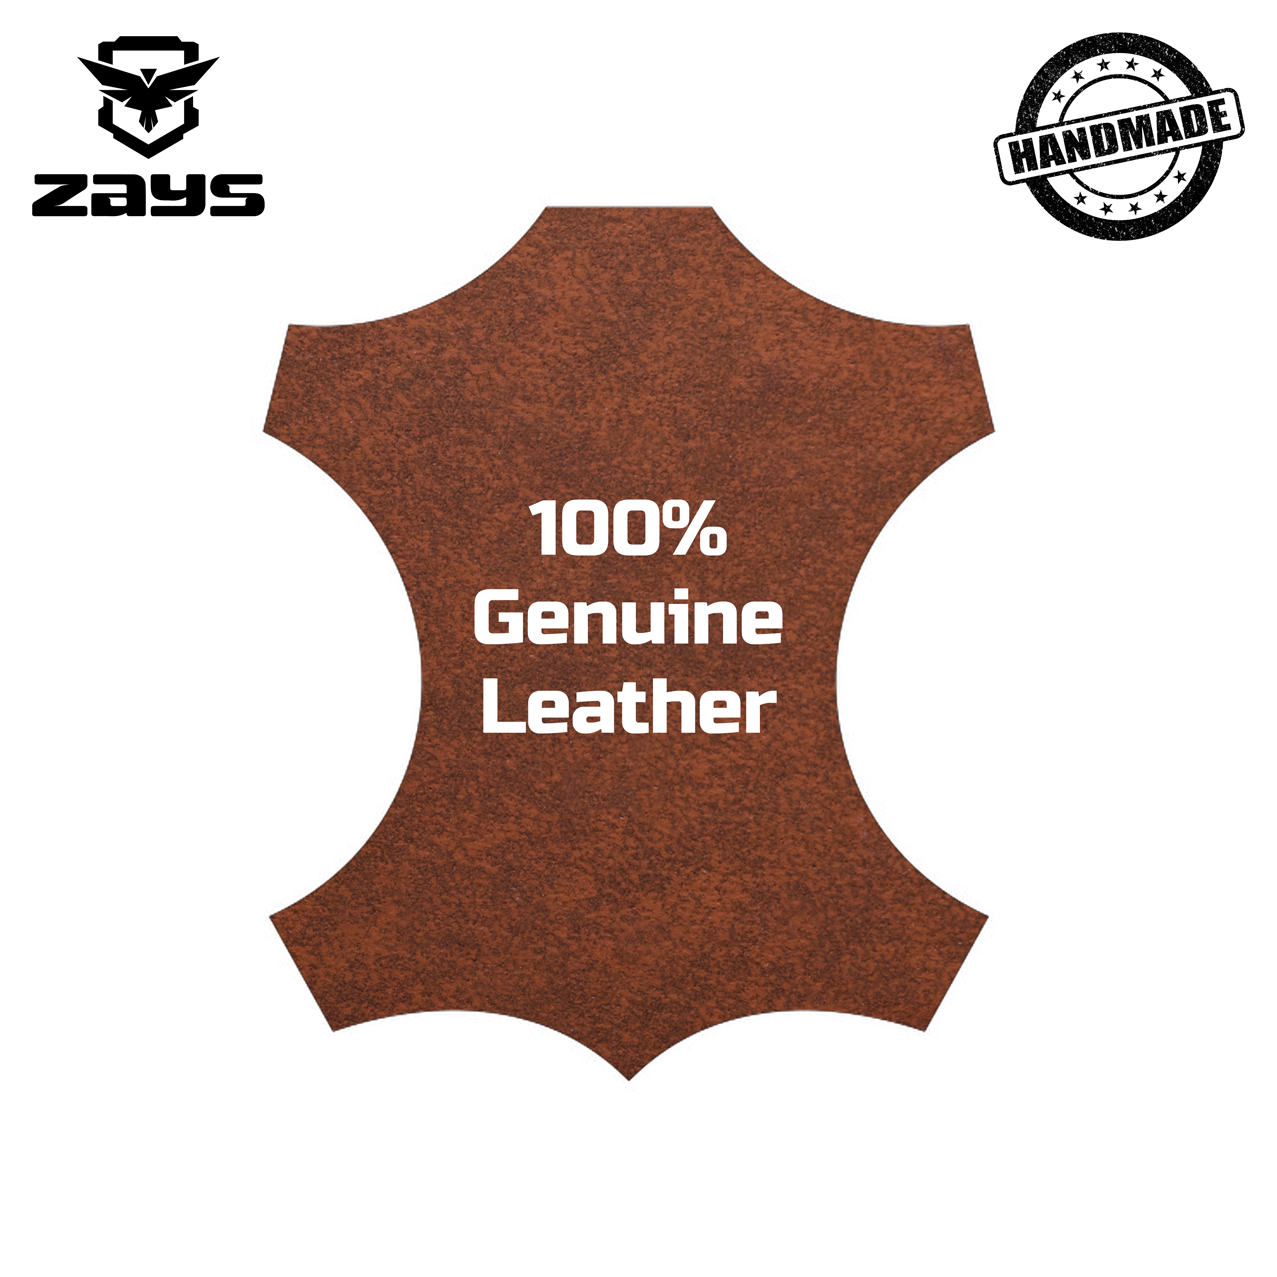 Zays Premium Leather Fashionable Ladies Party Bag (Orange) - ZAYSBG11